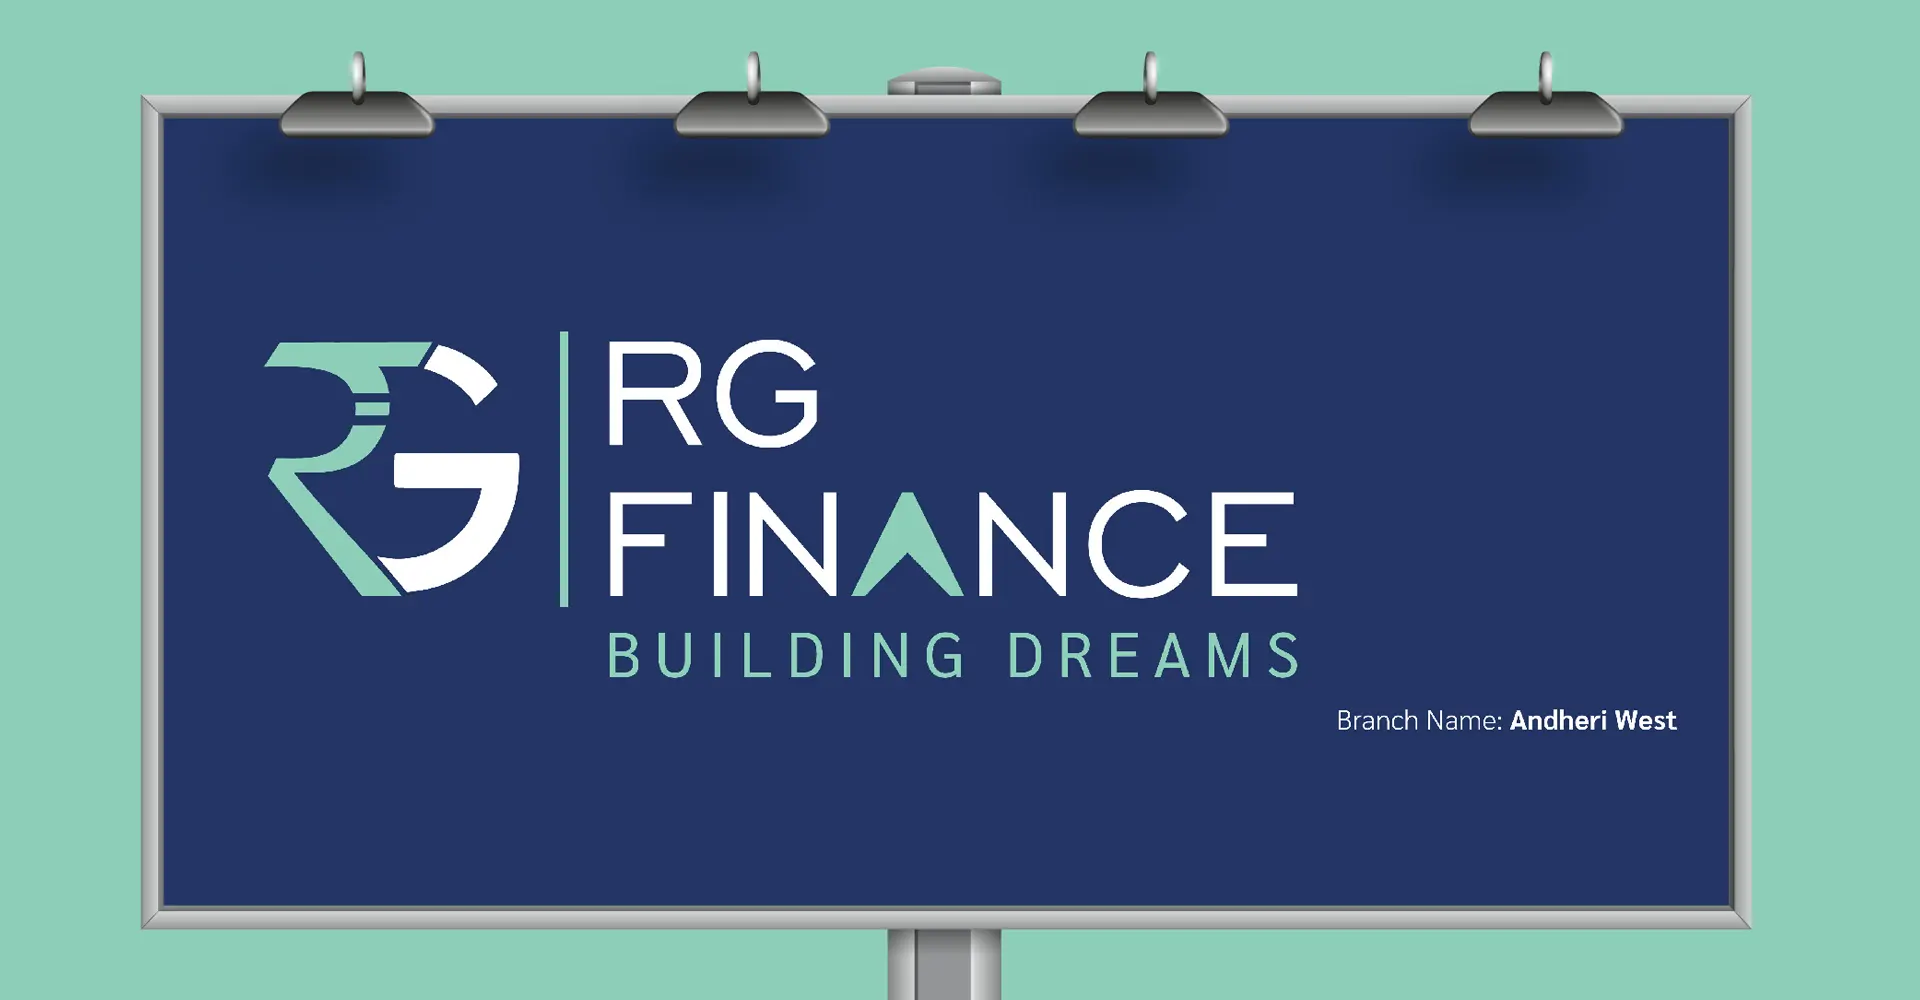 RG Finance